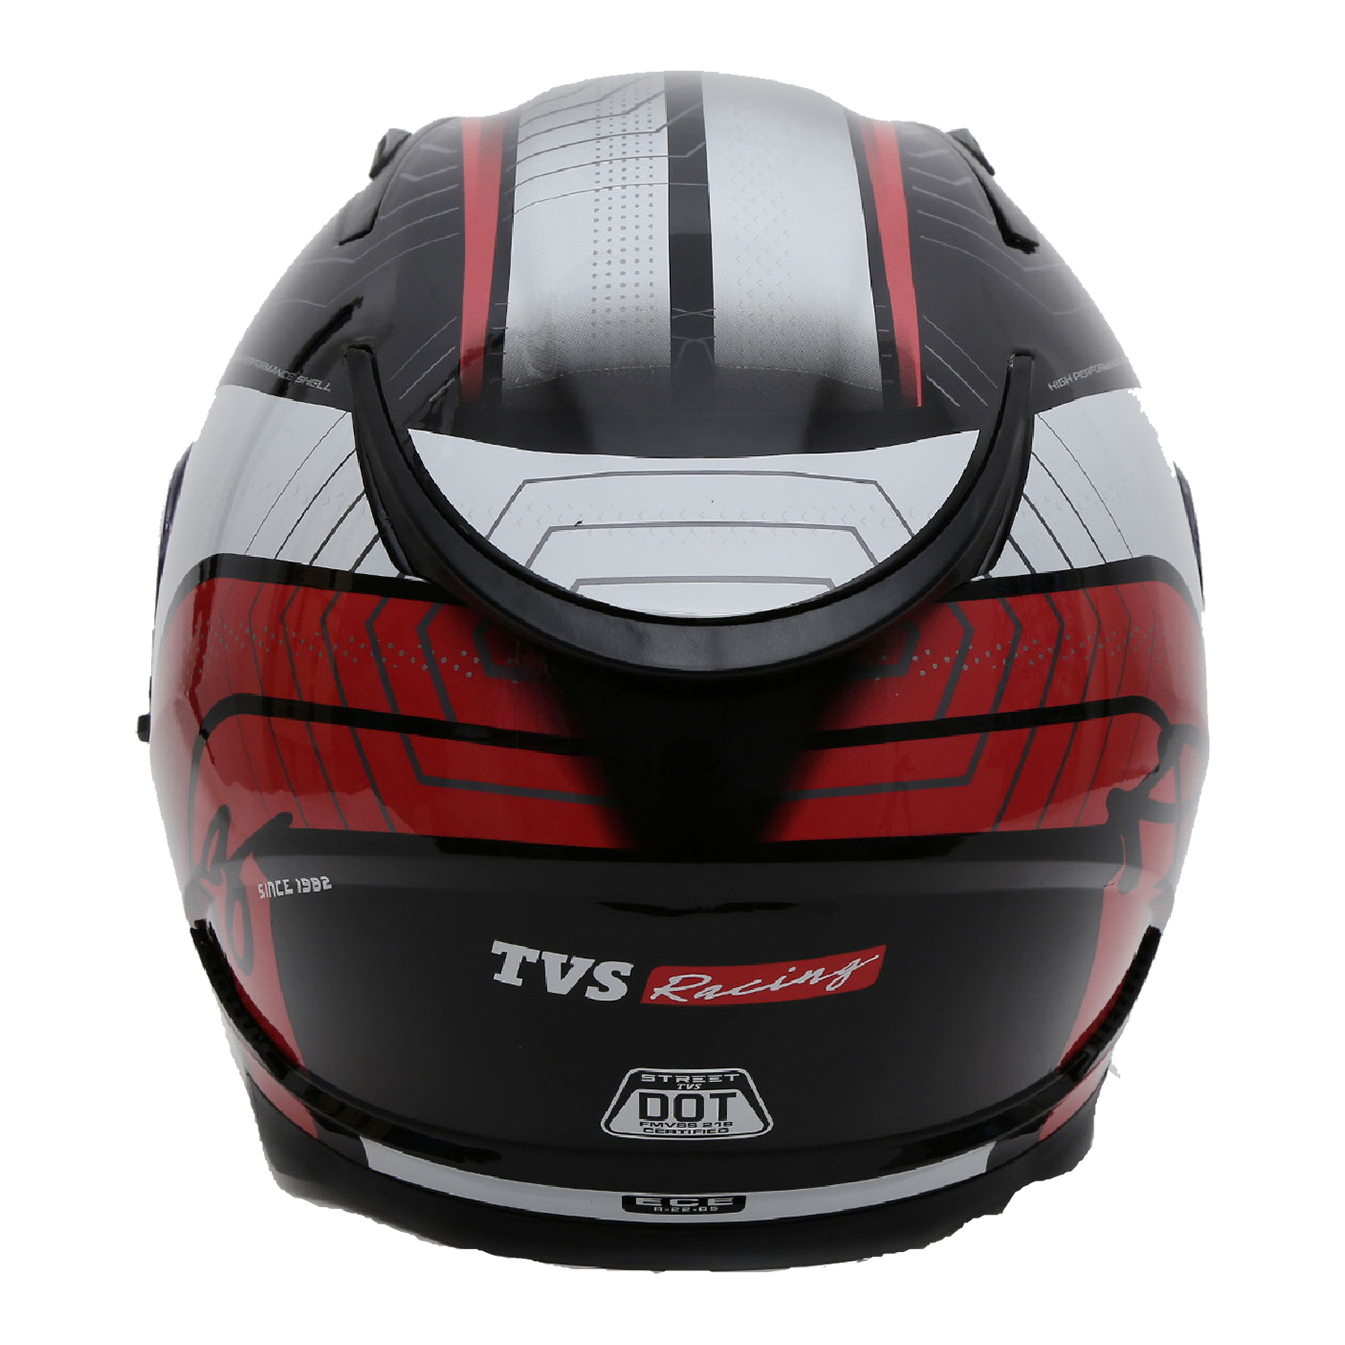  TVS Racing Helmet for Men – Anti-Fog Pin-Lock, Aerodynamic Design & DOT/ISI/ECE Certified – Premium Bike Helmet with Secure Fastening (Blue & Neon)